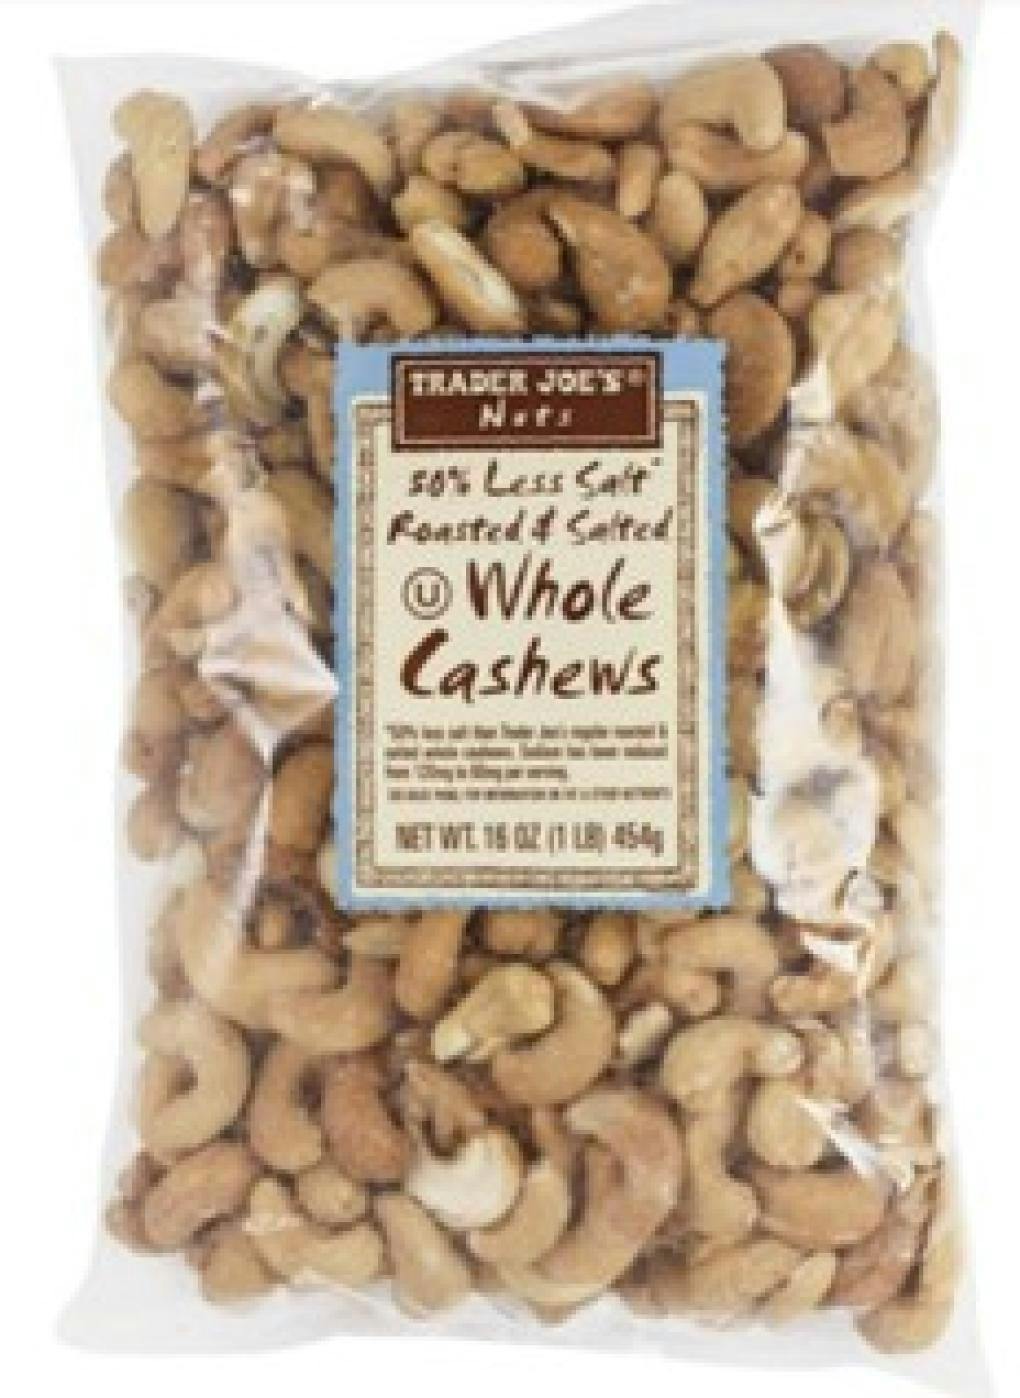 The recalled cashews | Image credits: FDA